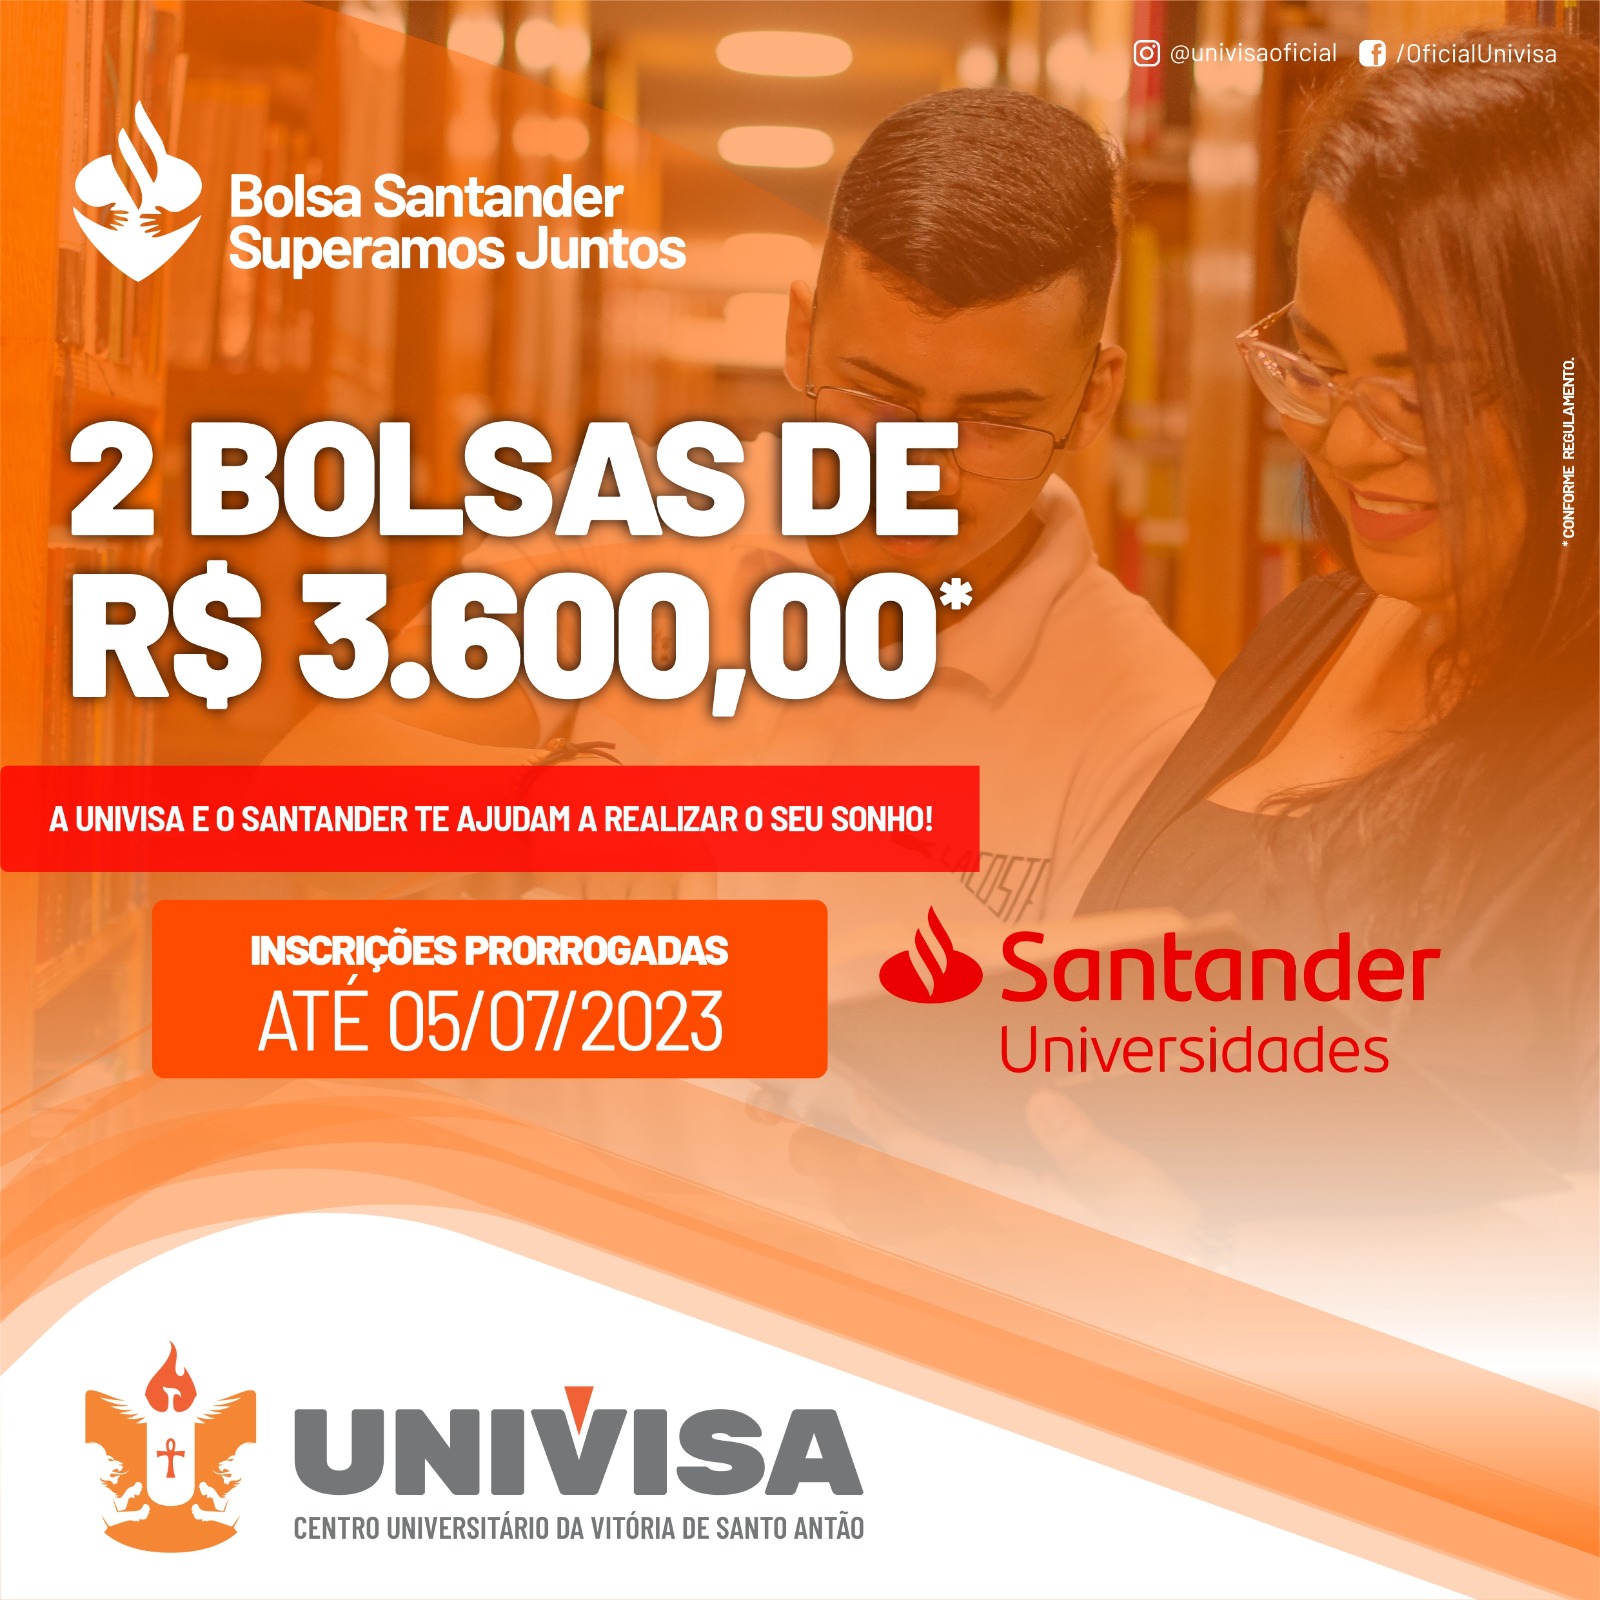 Bolsa Santander!